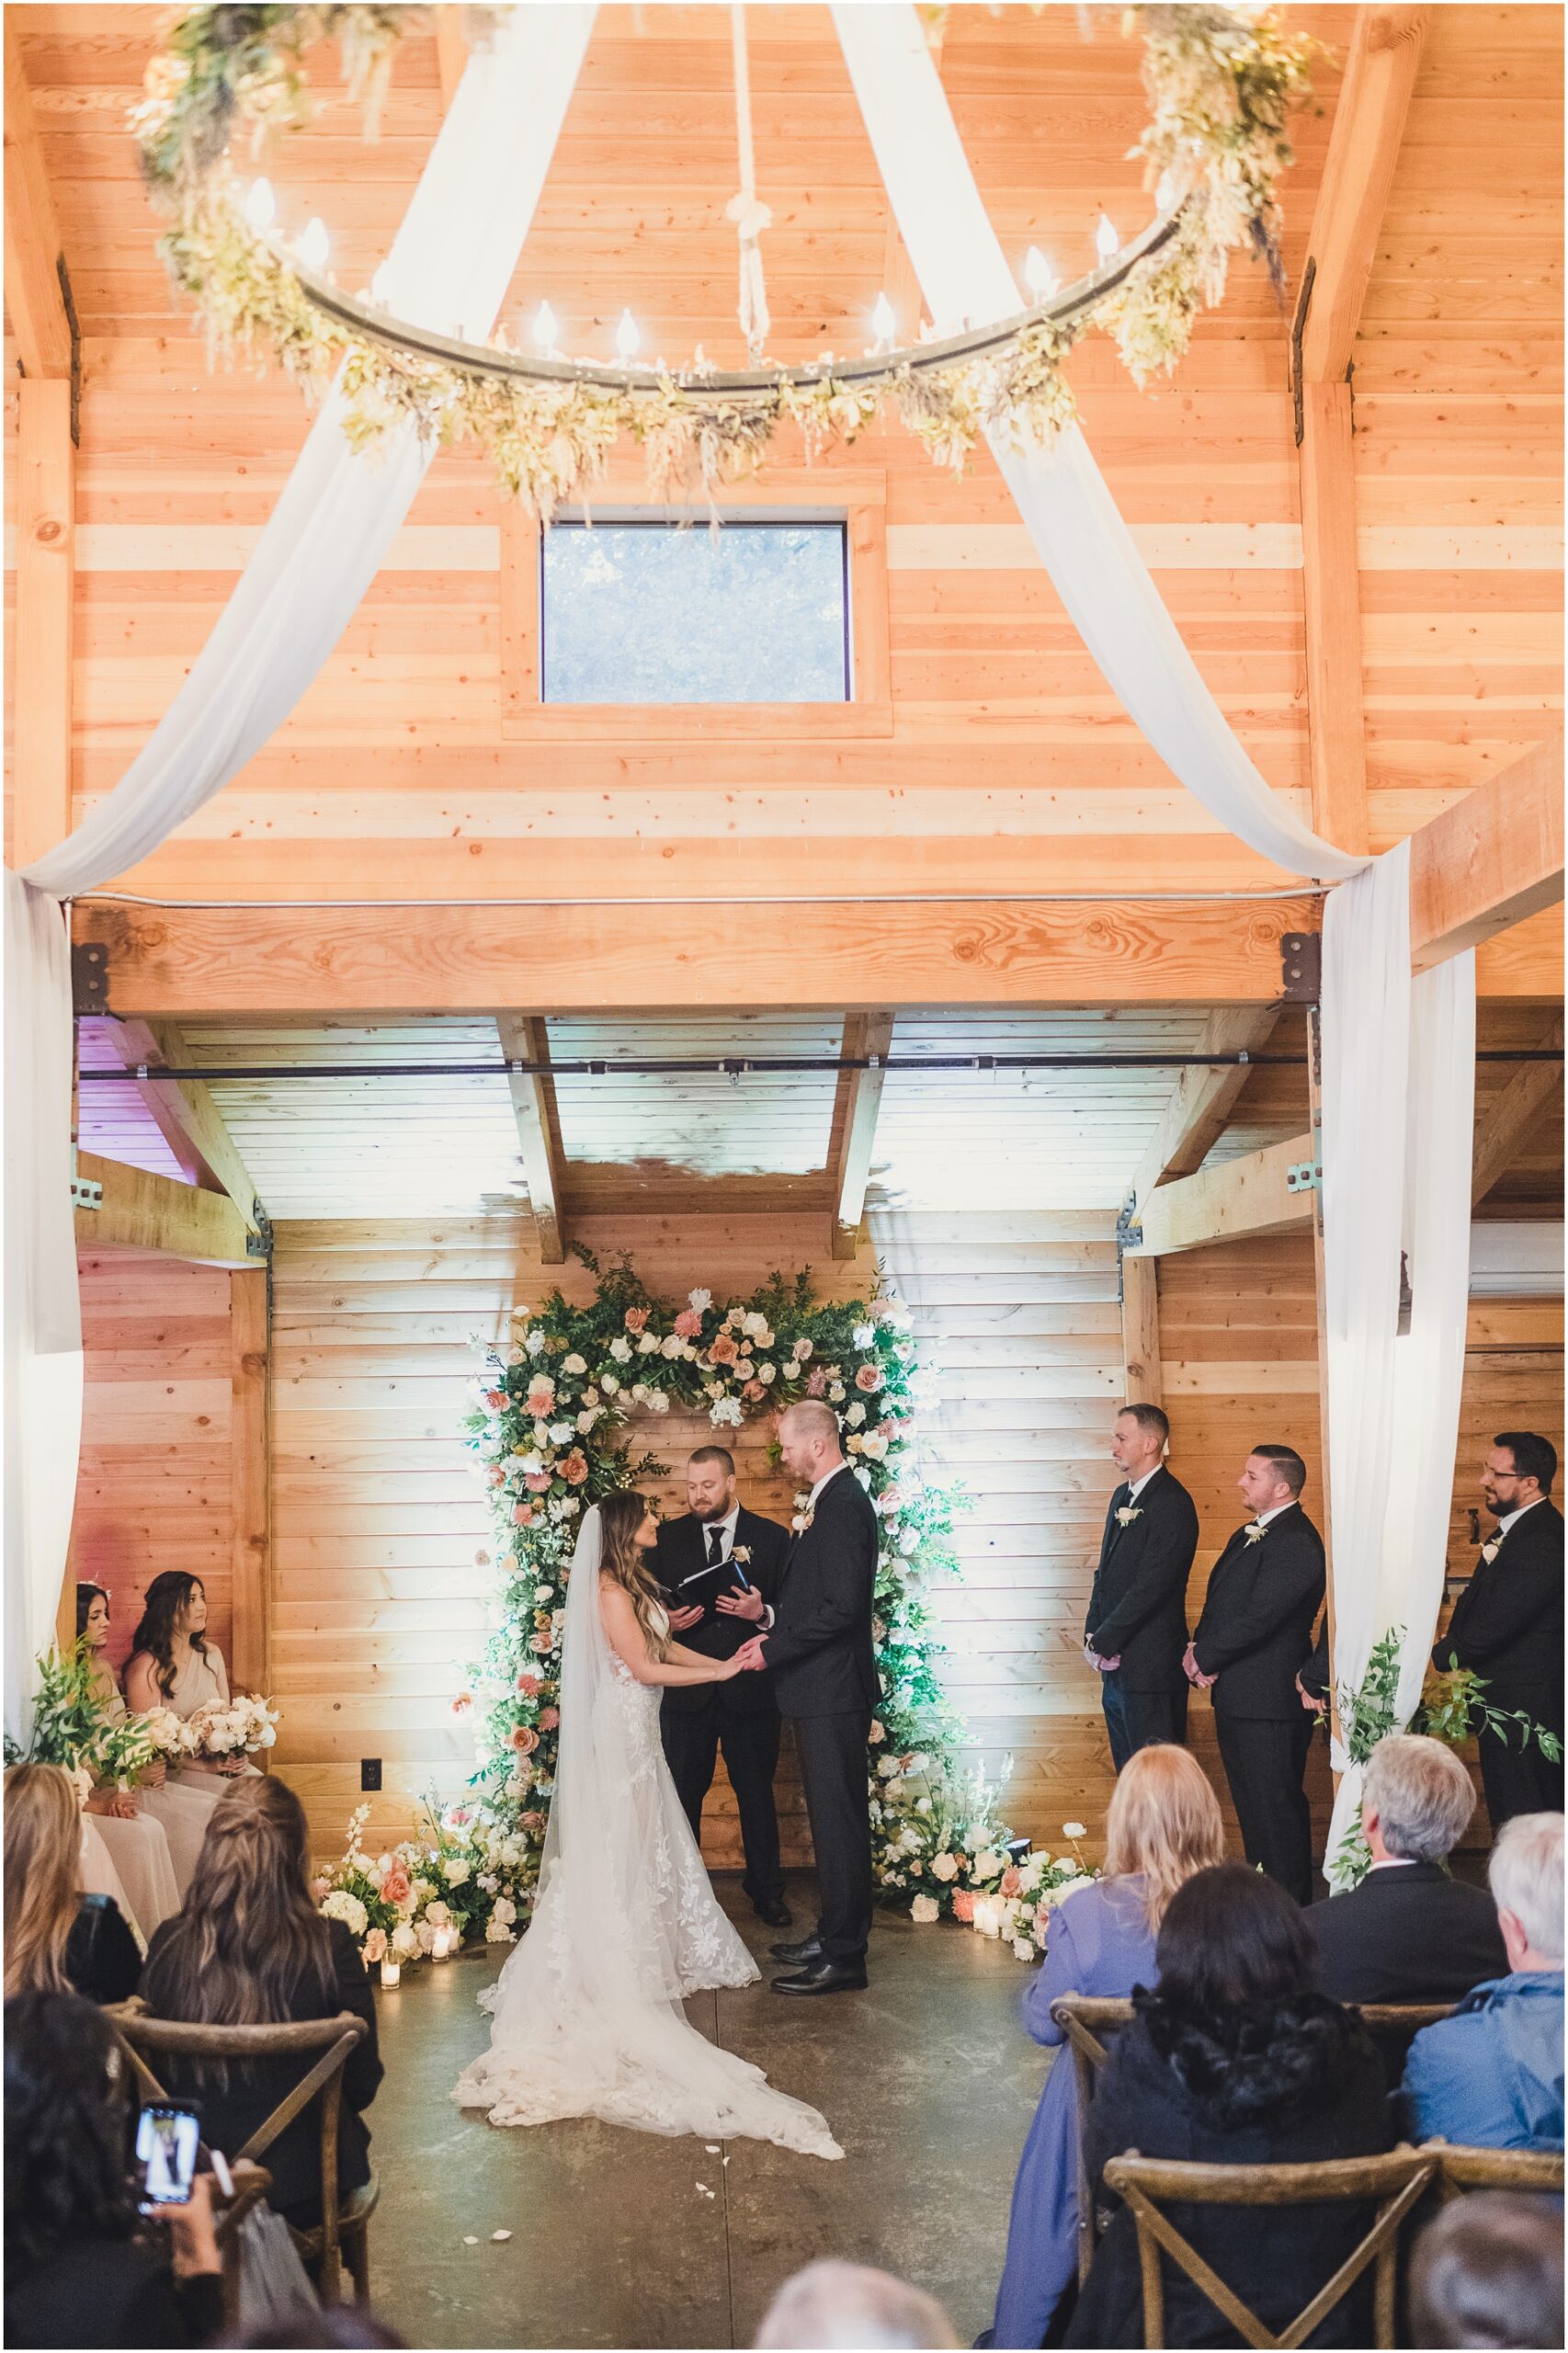 The inside of the Serendipity Garden Weddings' Barn, featuring a wedding